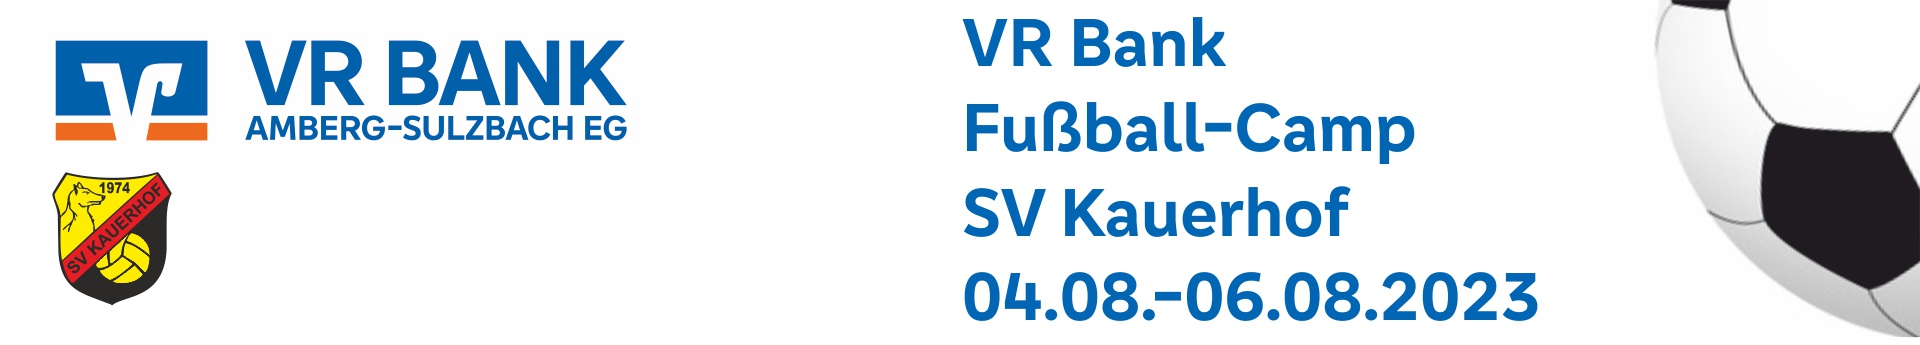 VR Fussballcamp 2023 Kauerhof Title Image